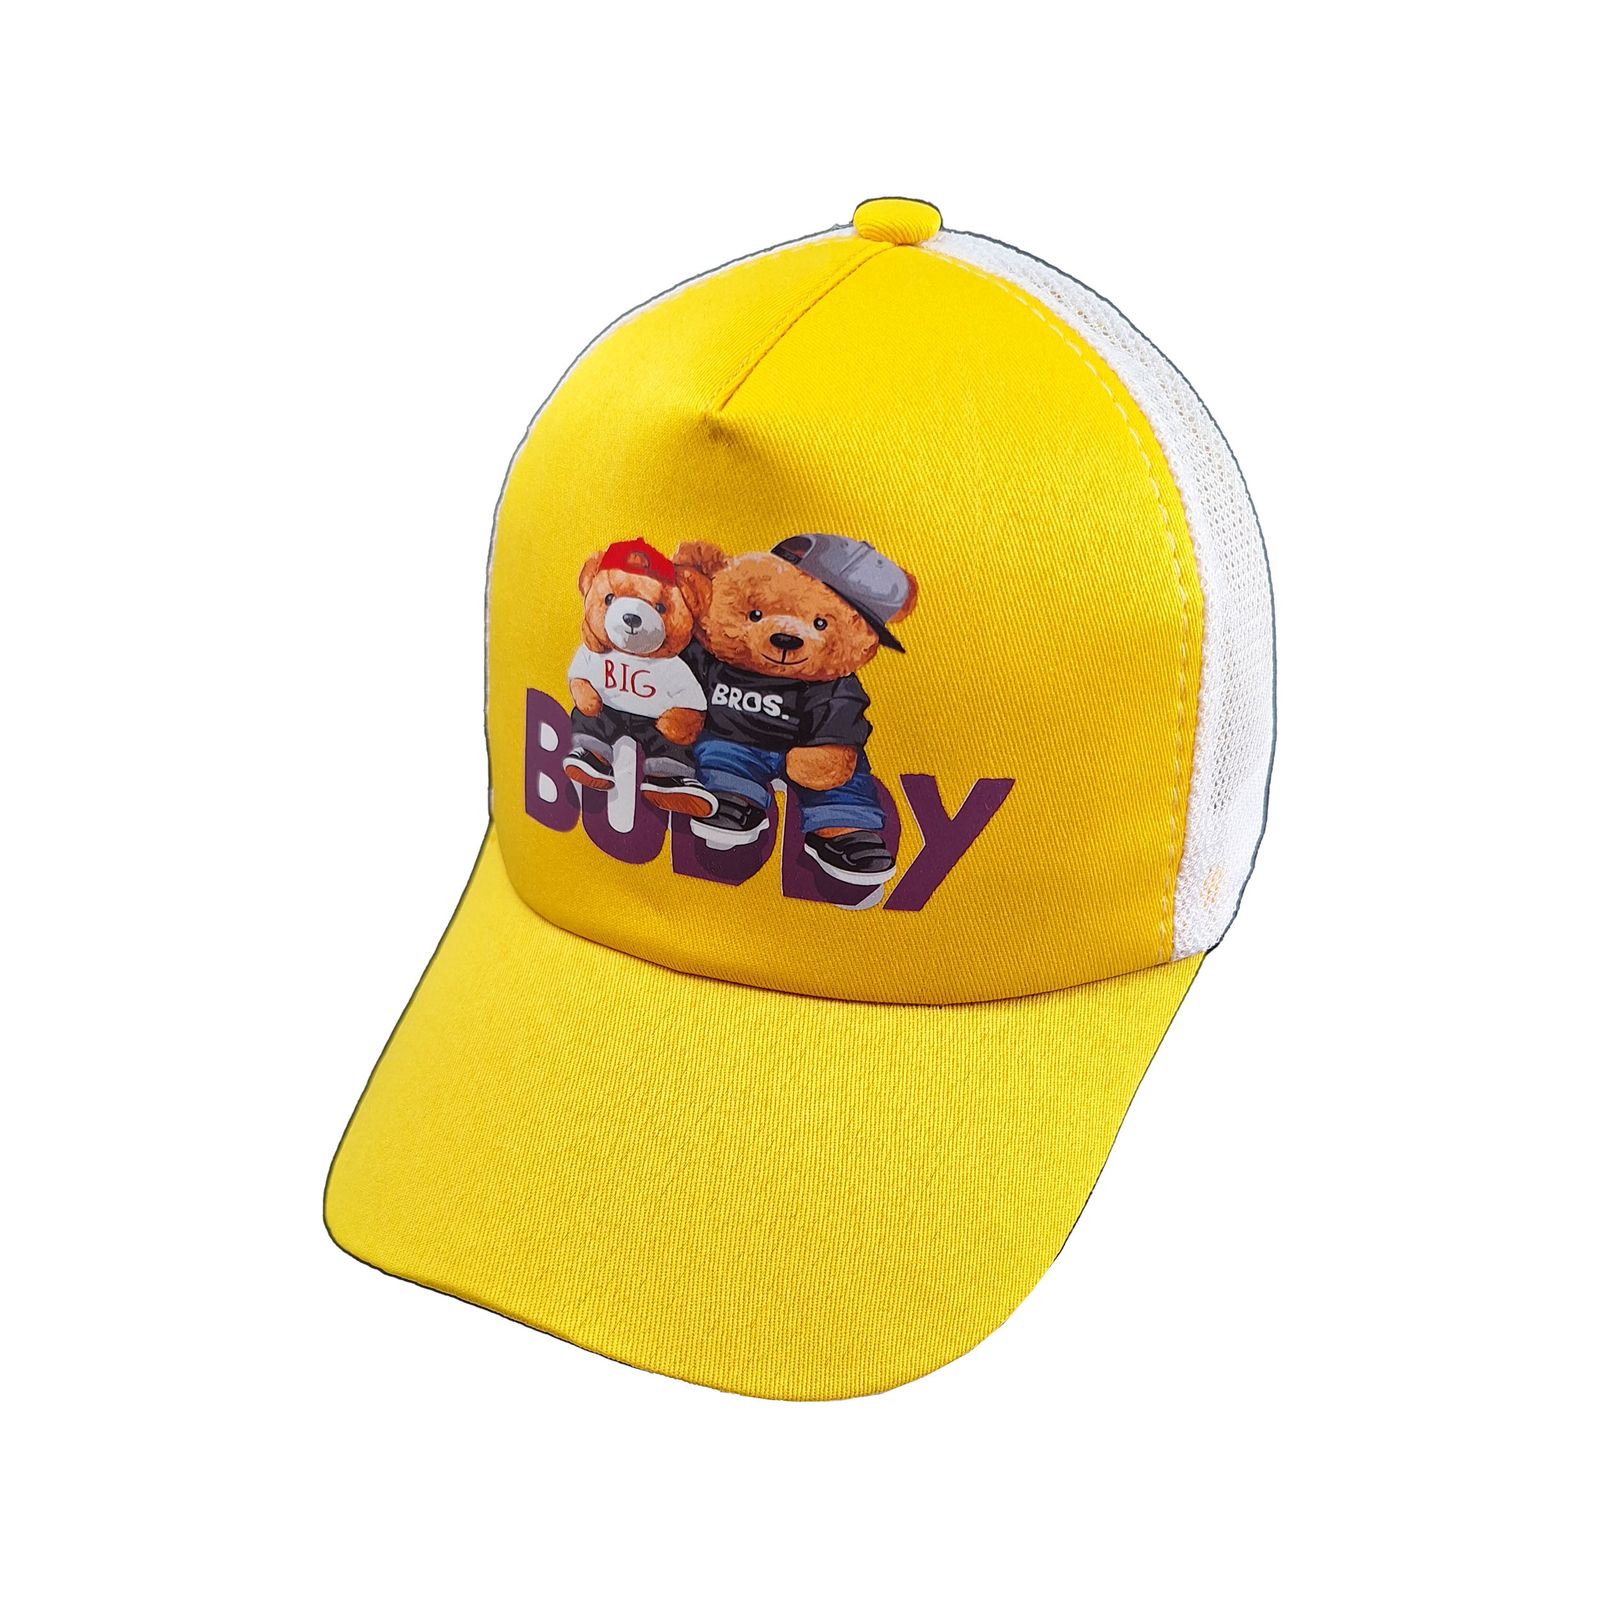 کلاه کپ بچگانه مدل BDDY کد 1190 رنگ زرد -  - 3